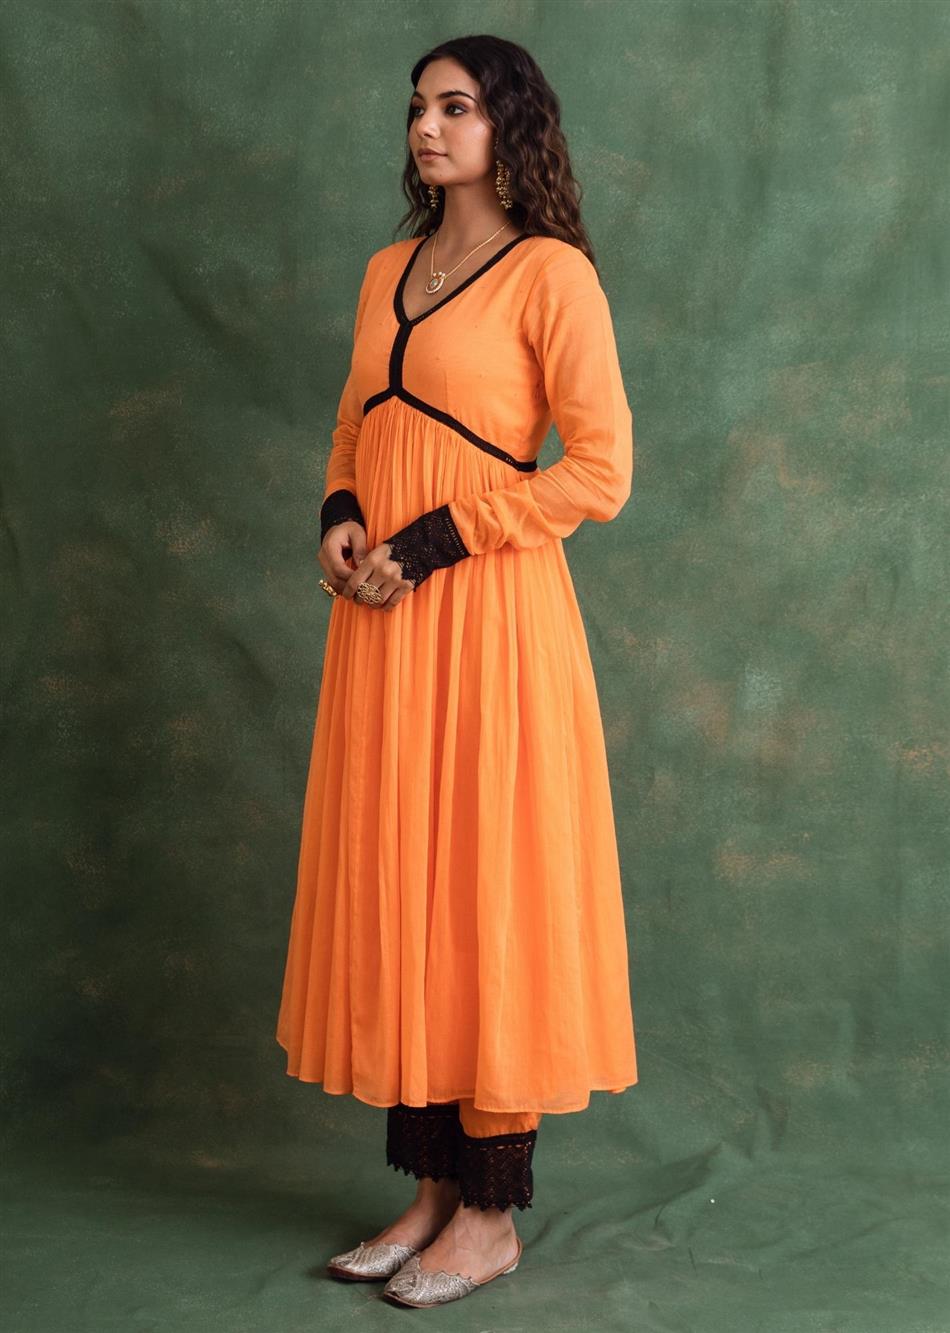 Rangrezee - Candy Orange Anarkali Kurta with Black Lace Details